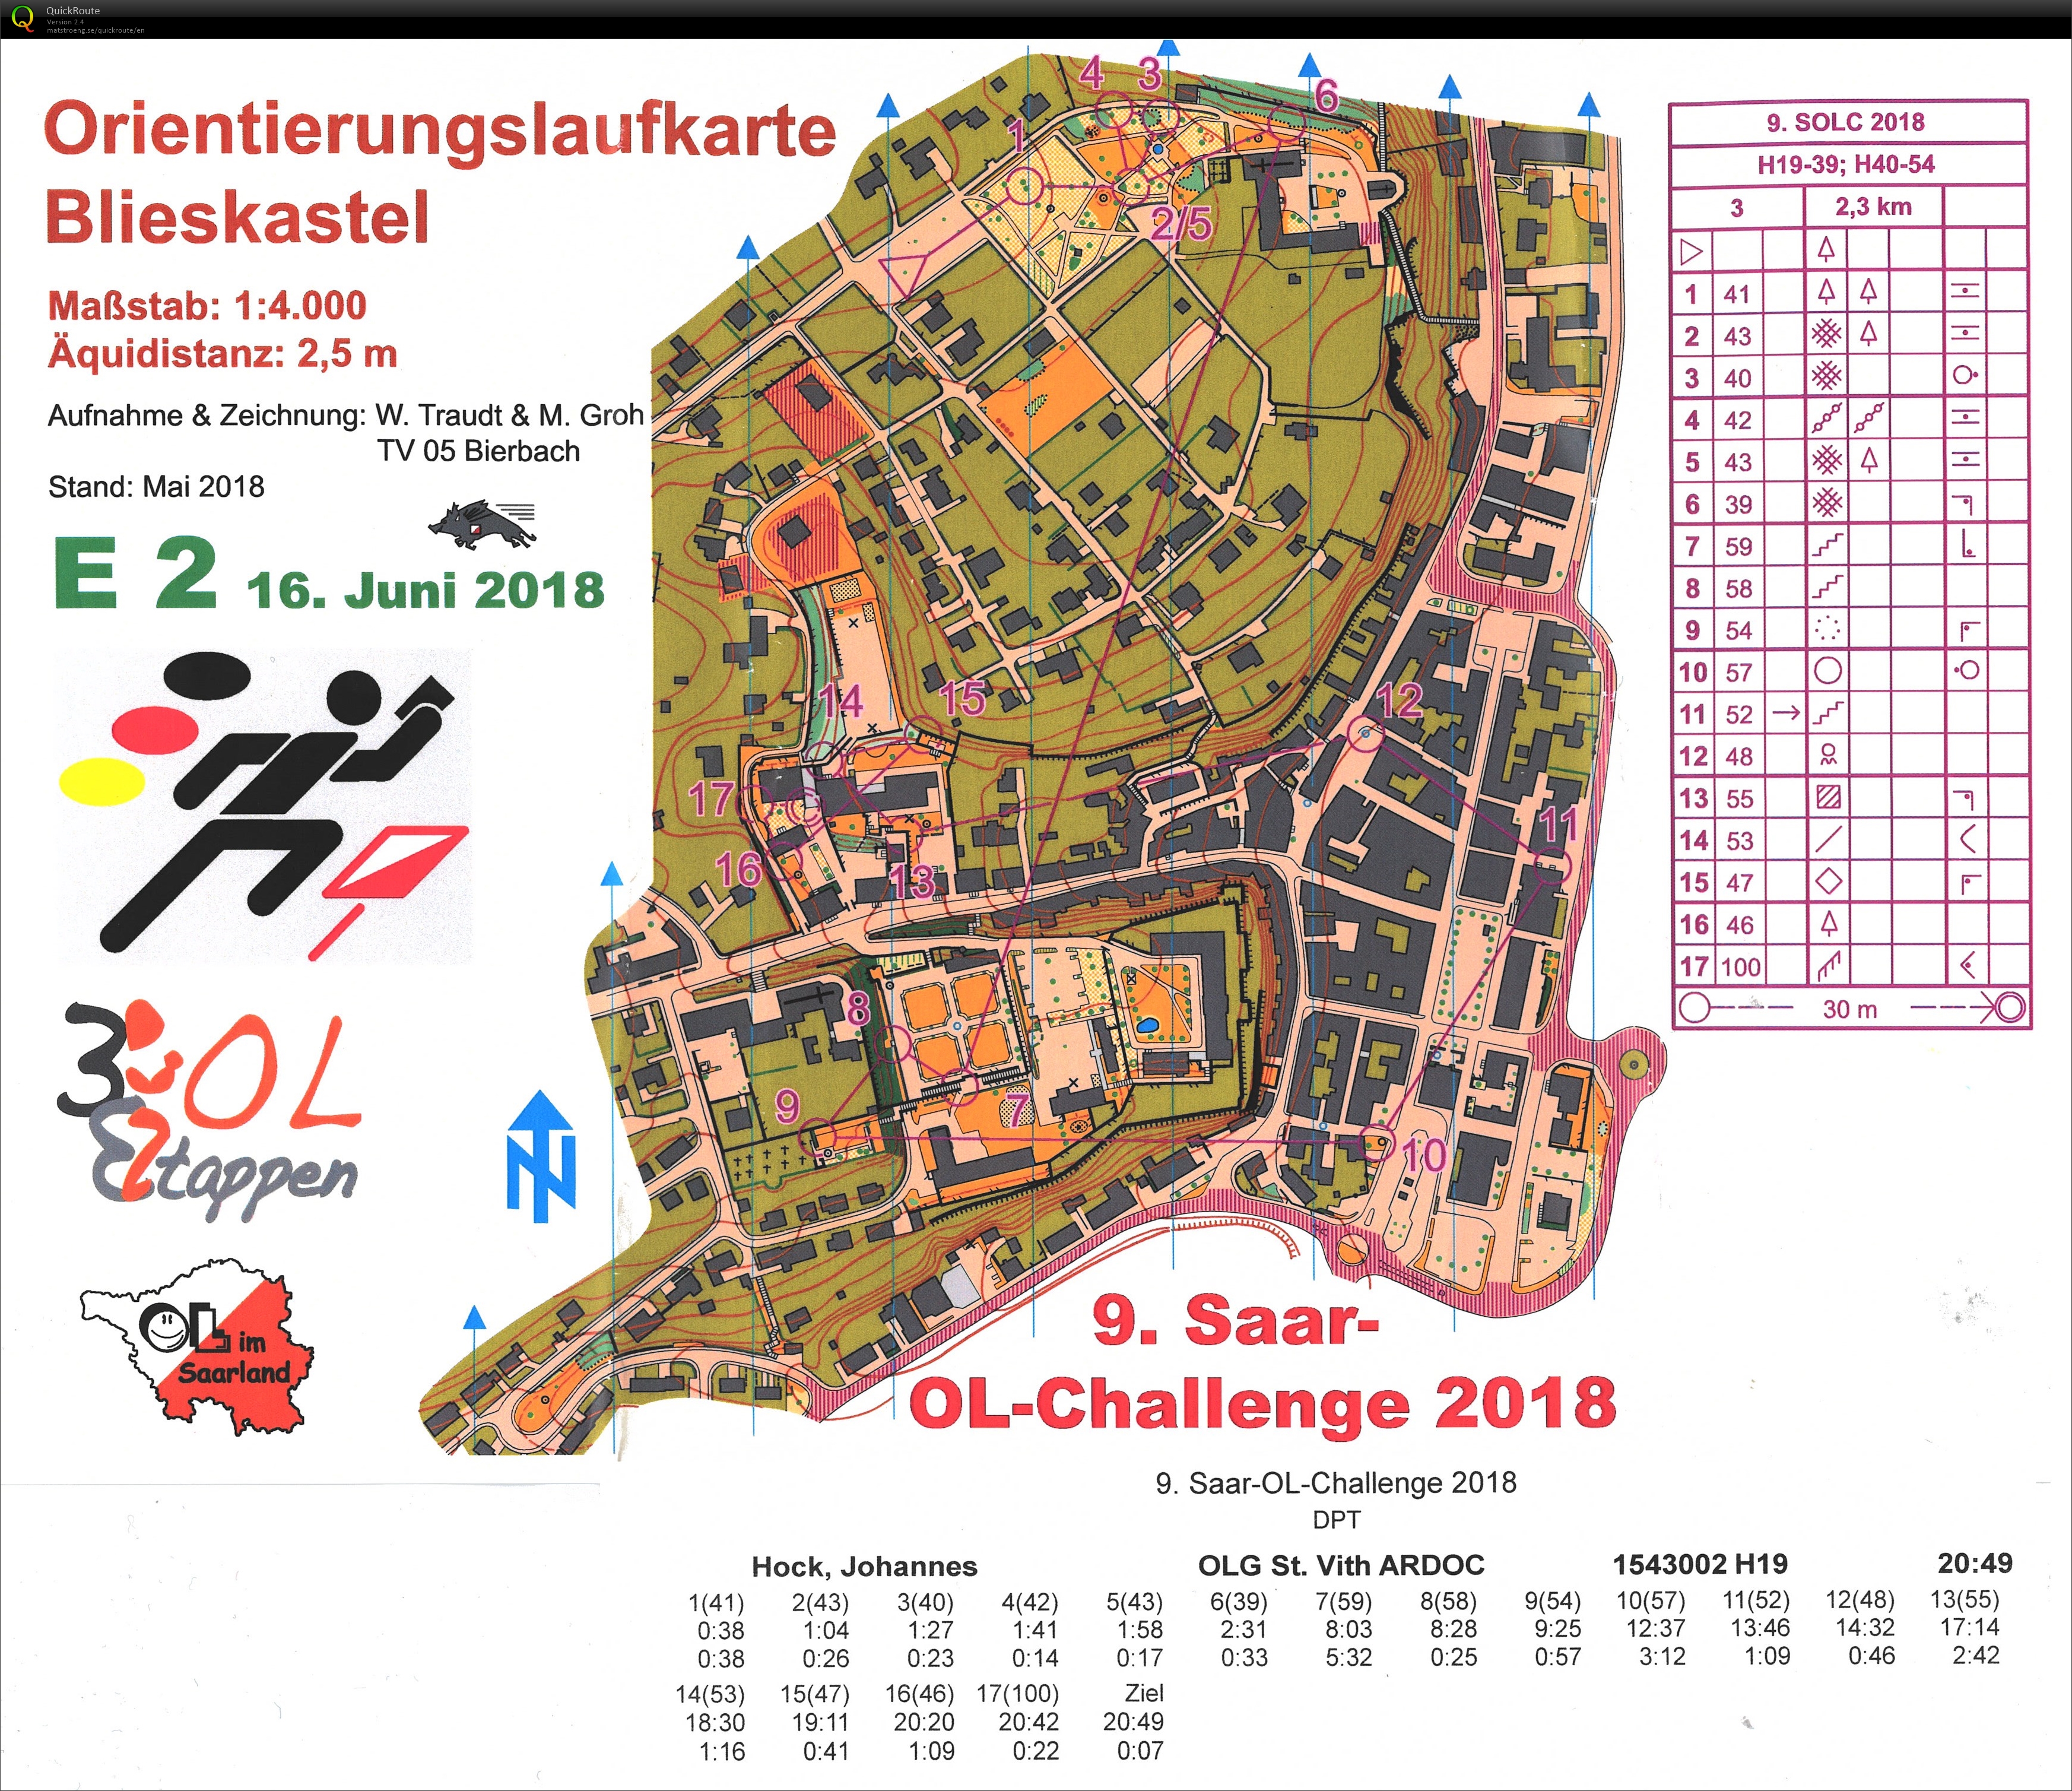 9. Saar-OL-Challenge 2018 (16/06/2018)